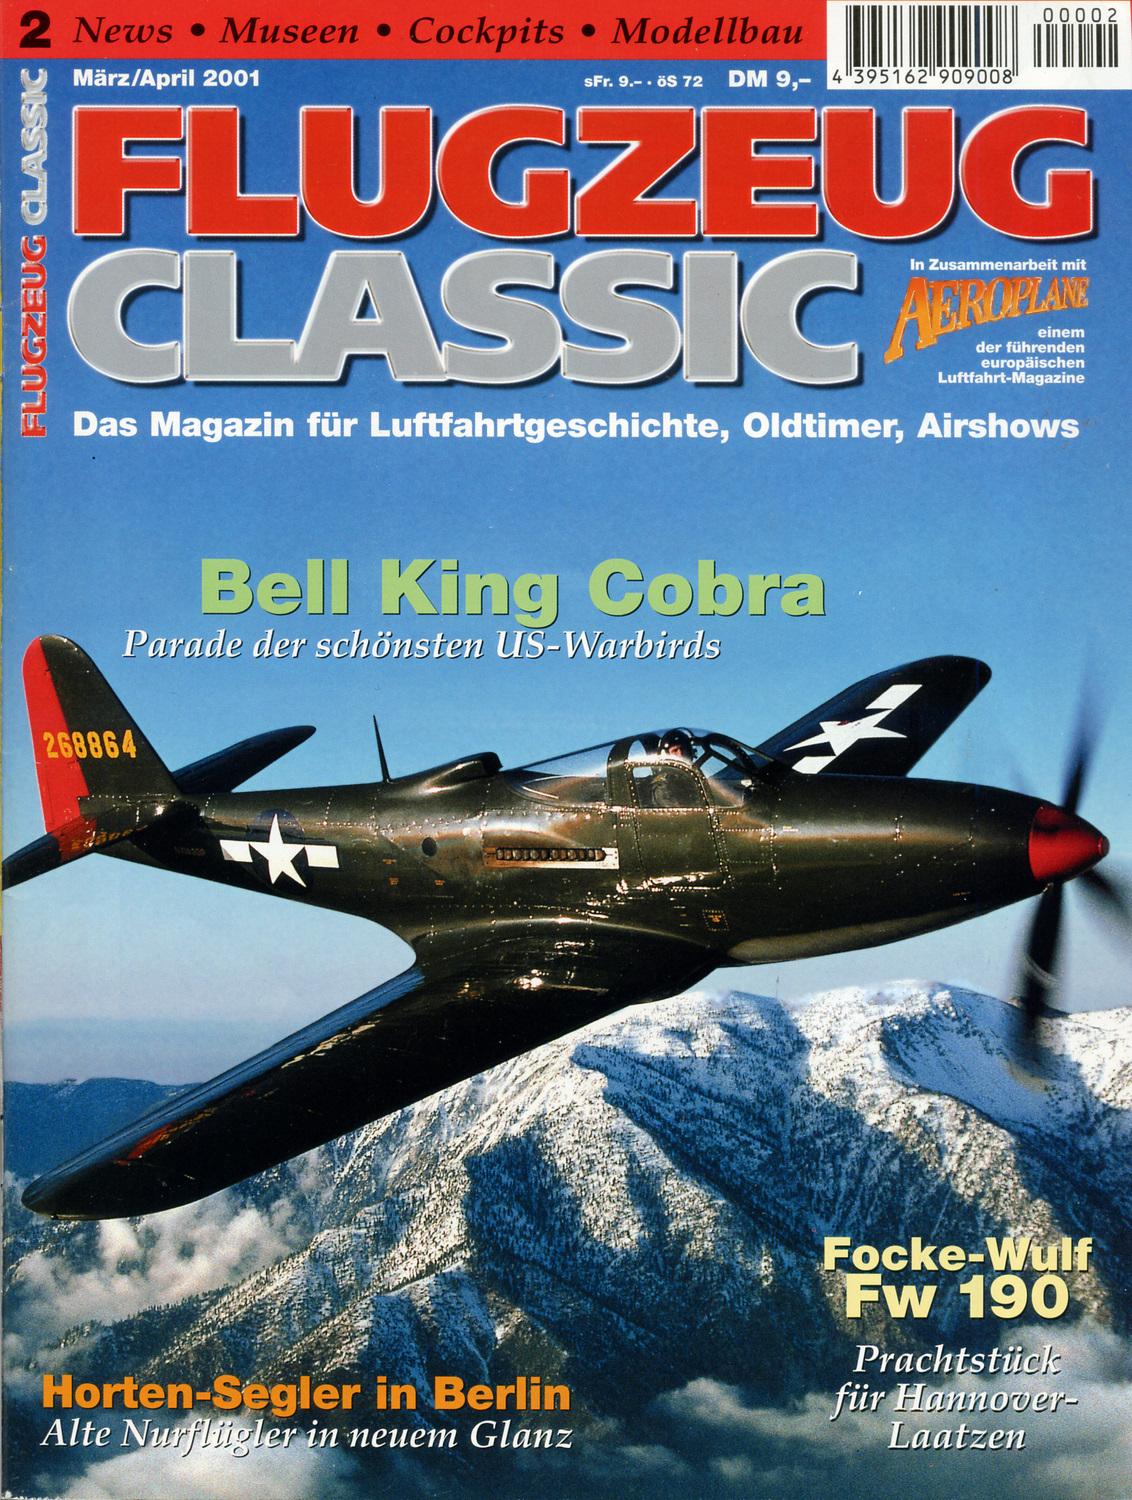 2001 - Flugzeug Classic 2001-02.JPG